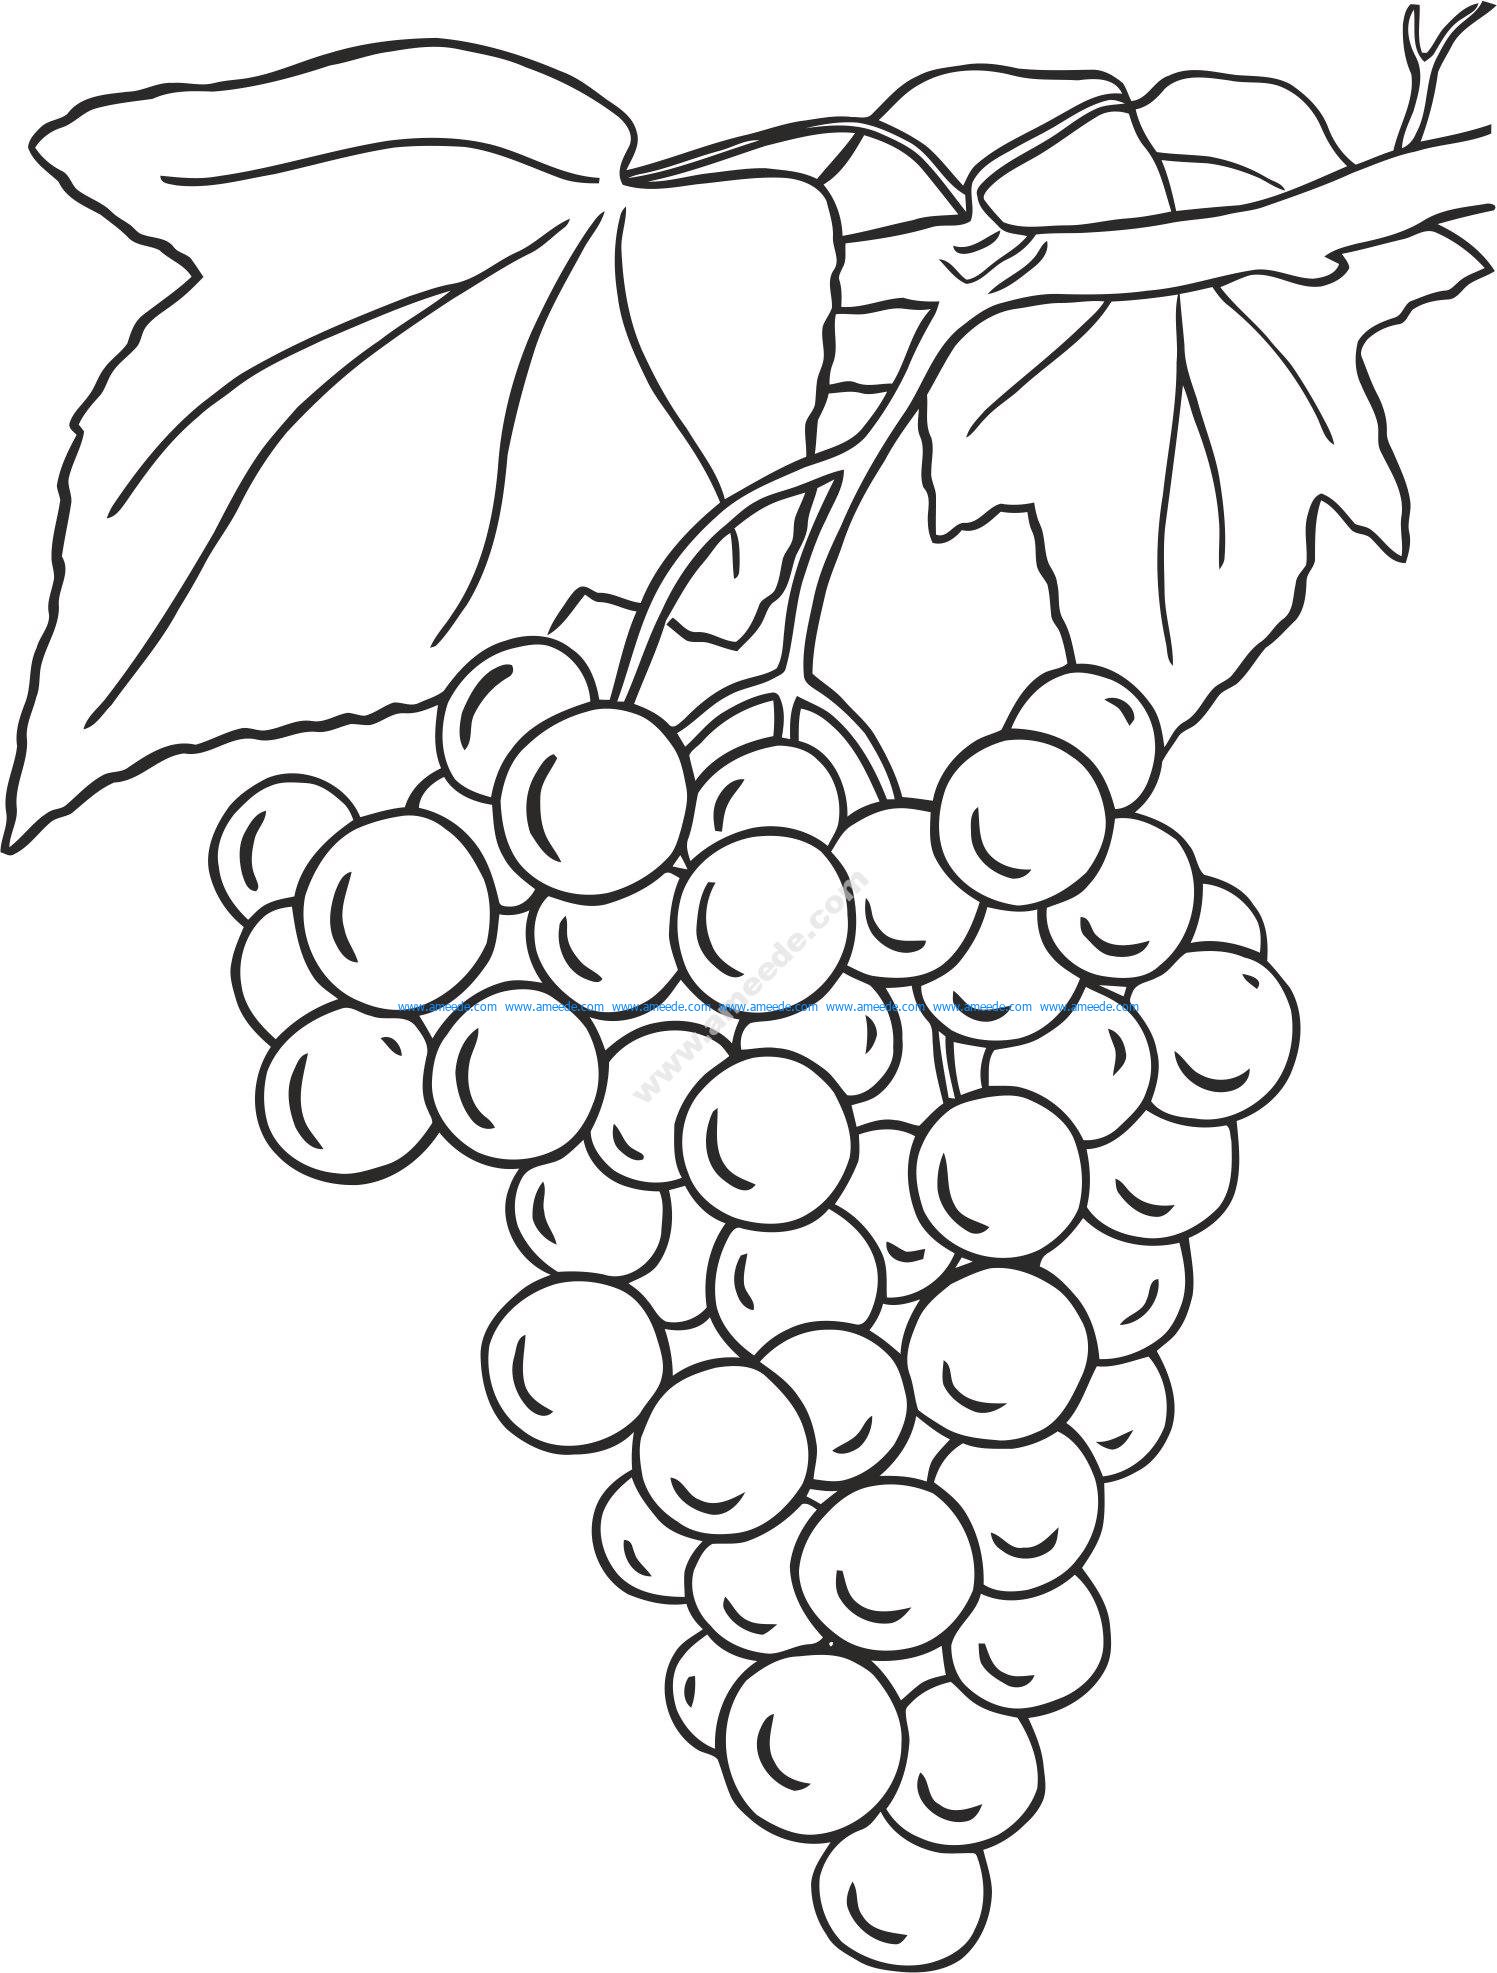 Grapes Design